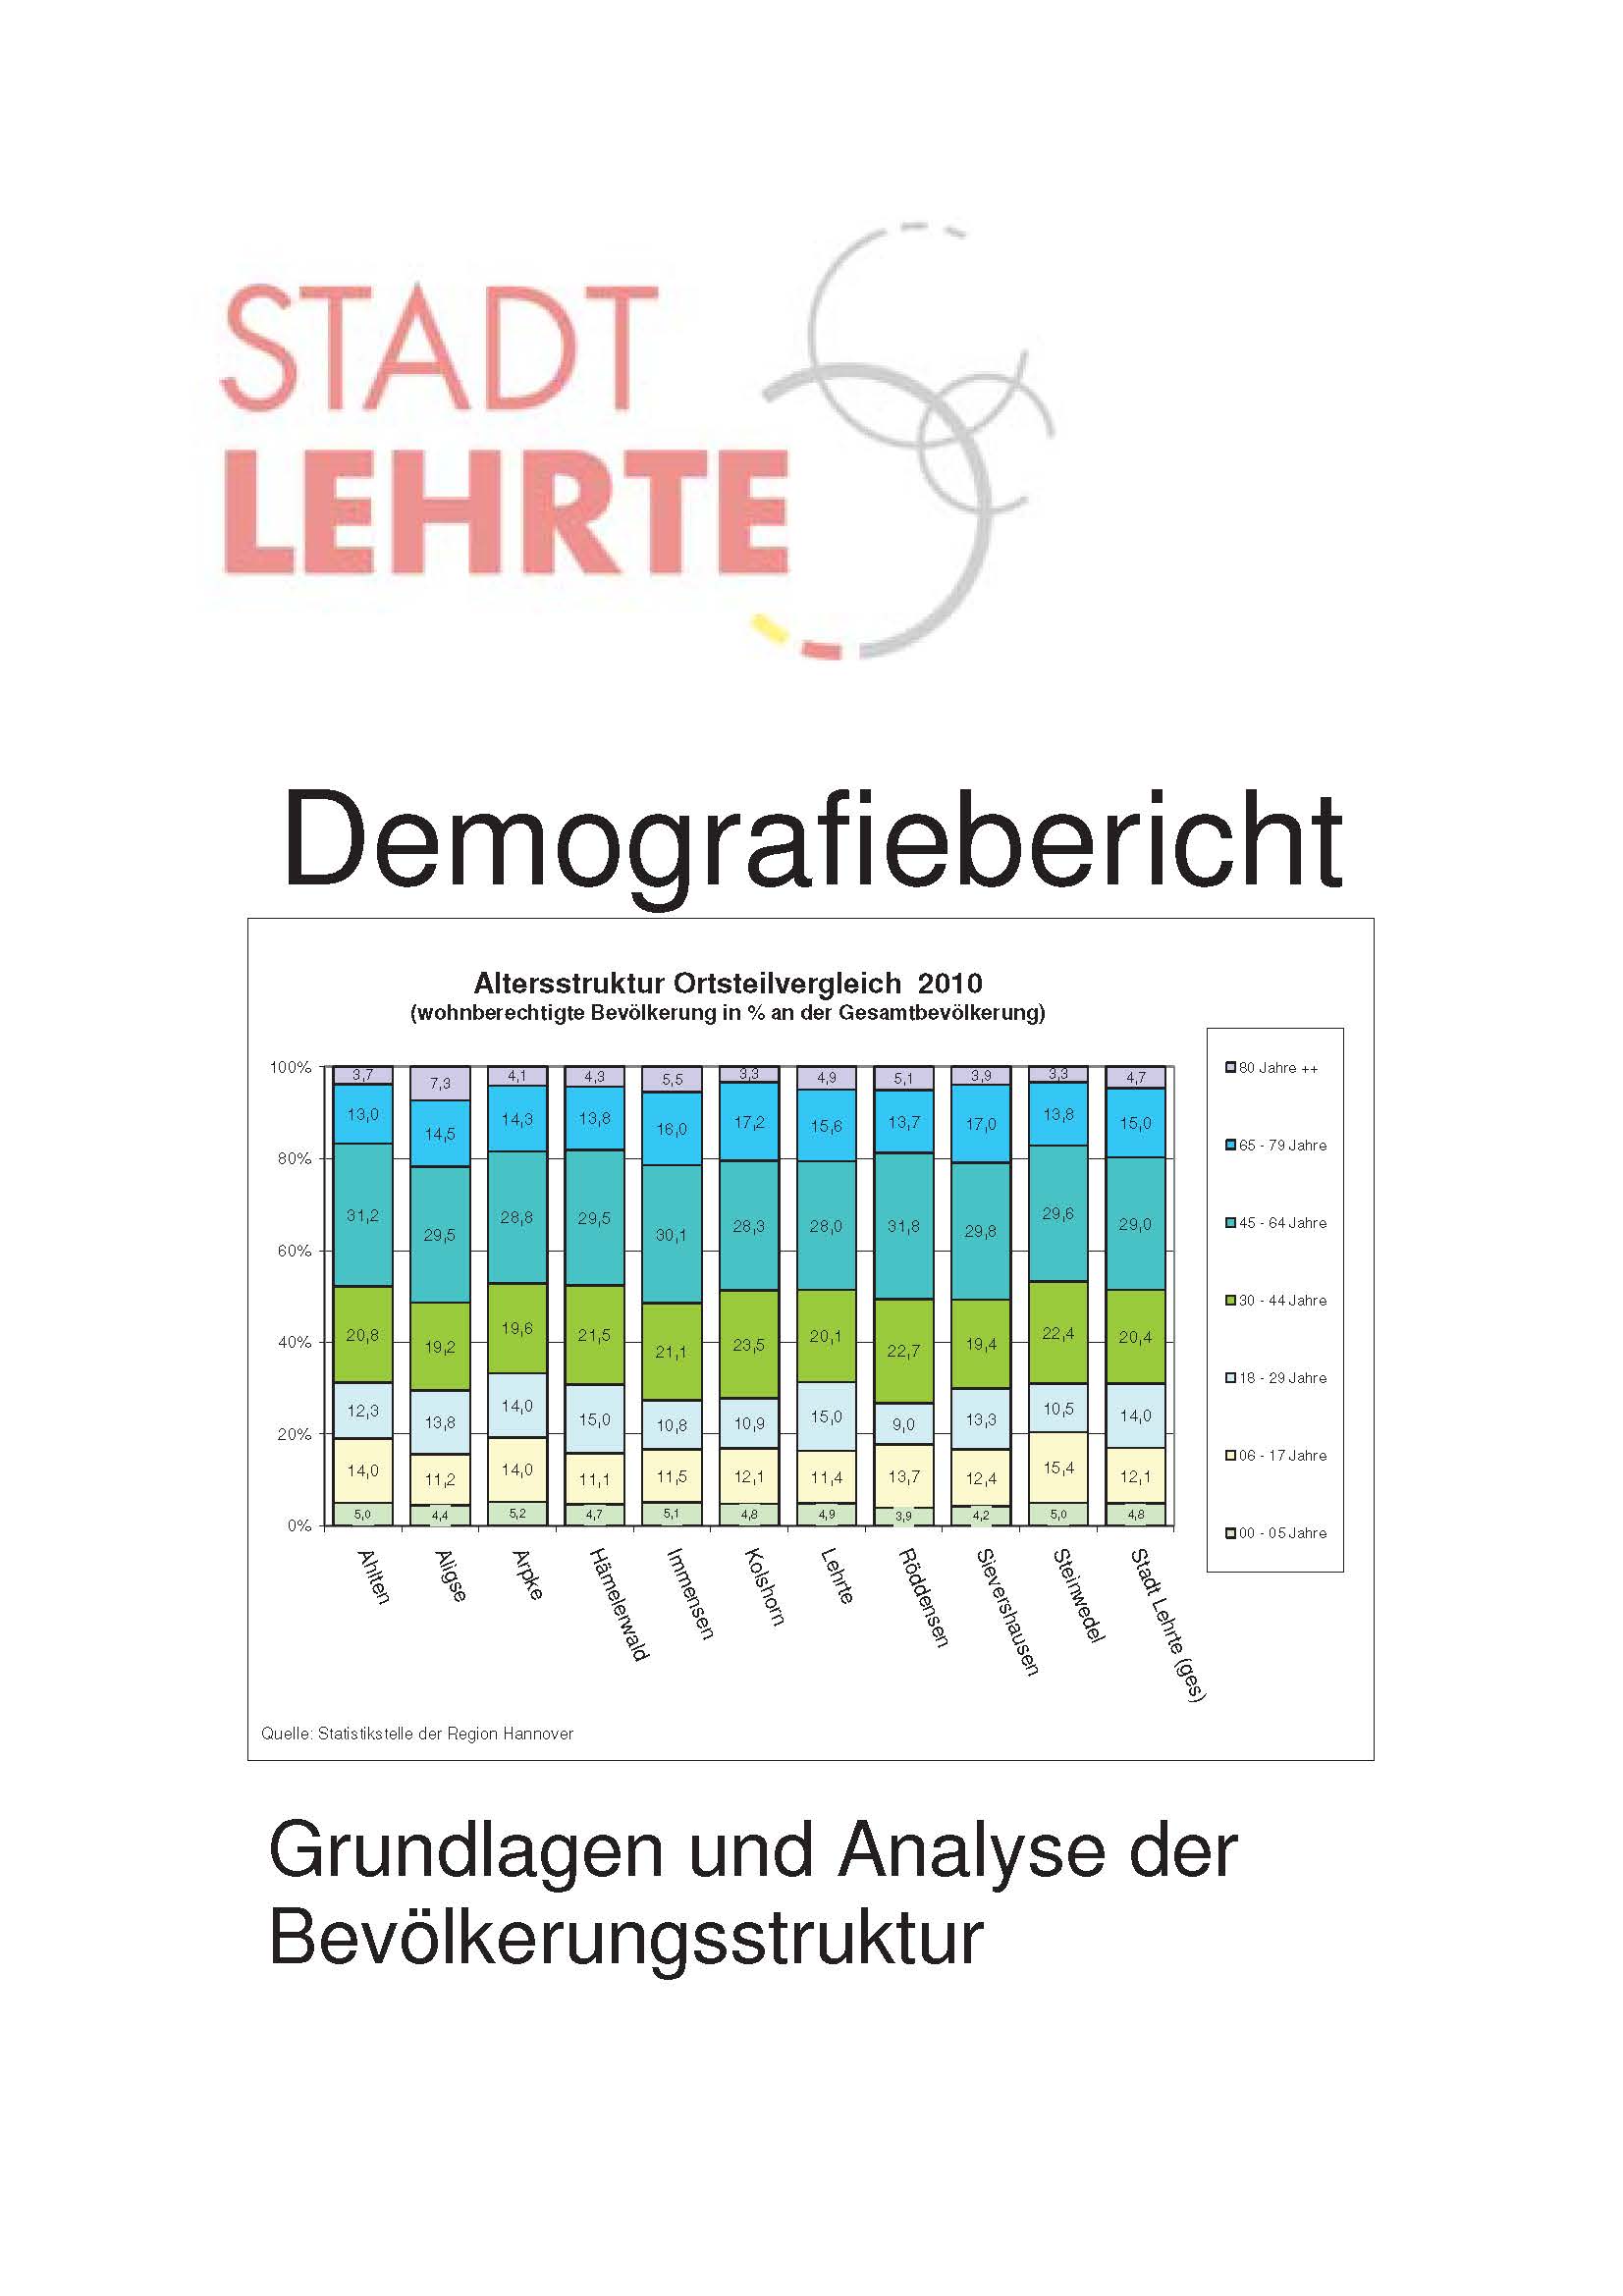 demografiebericht2011 ©Holger Klinkert